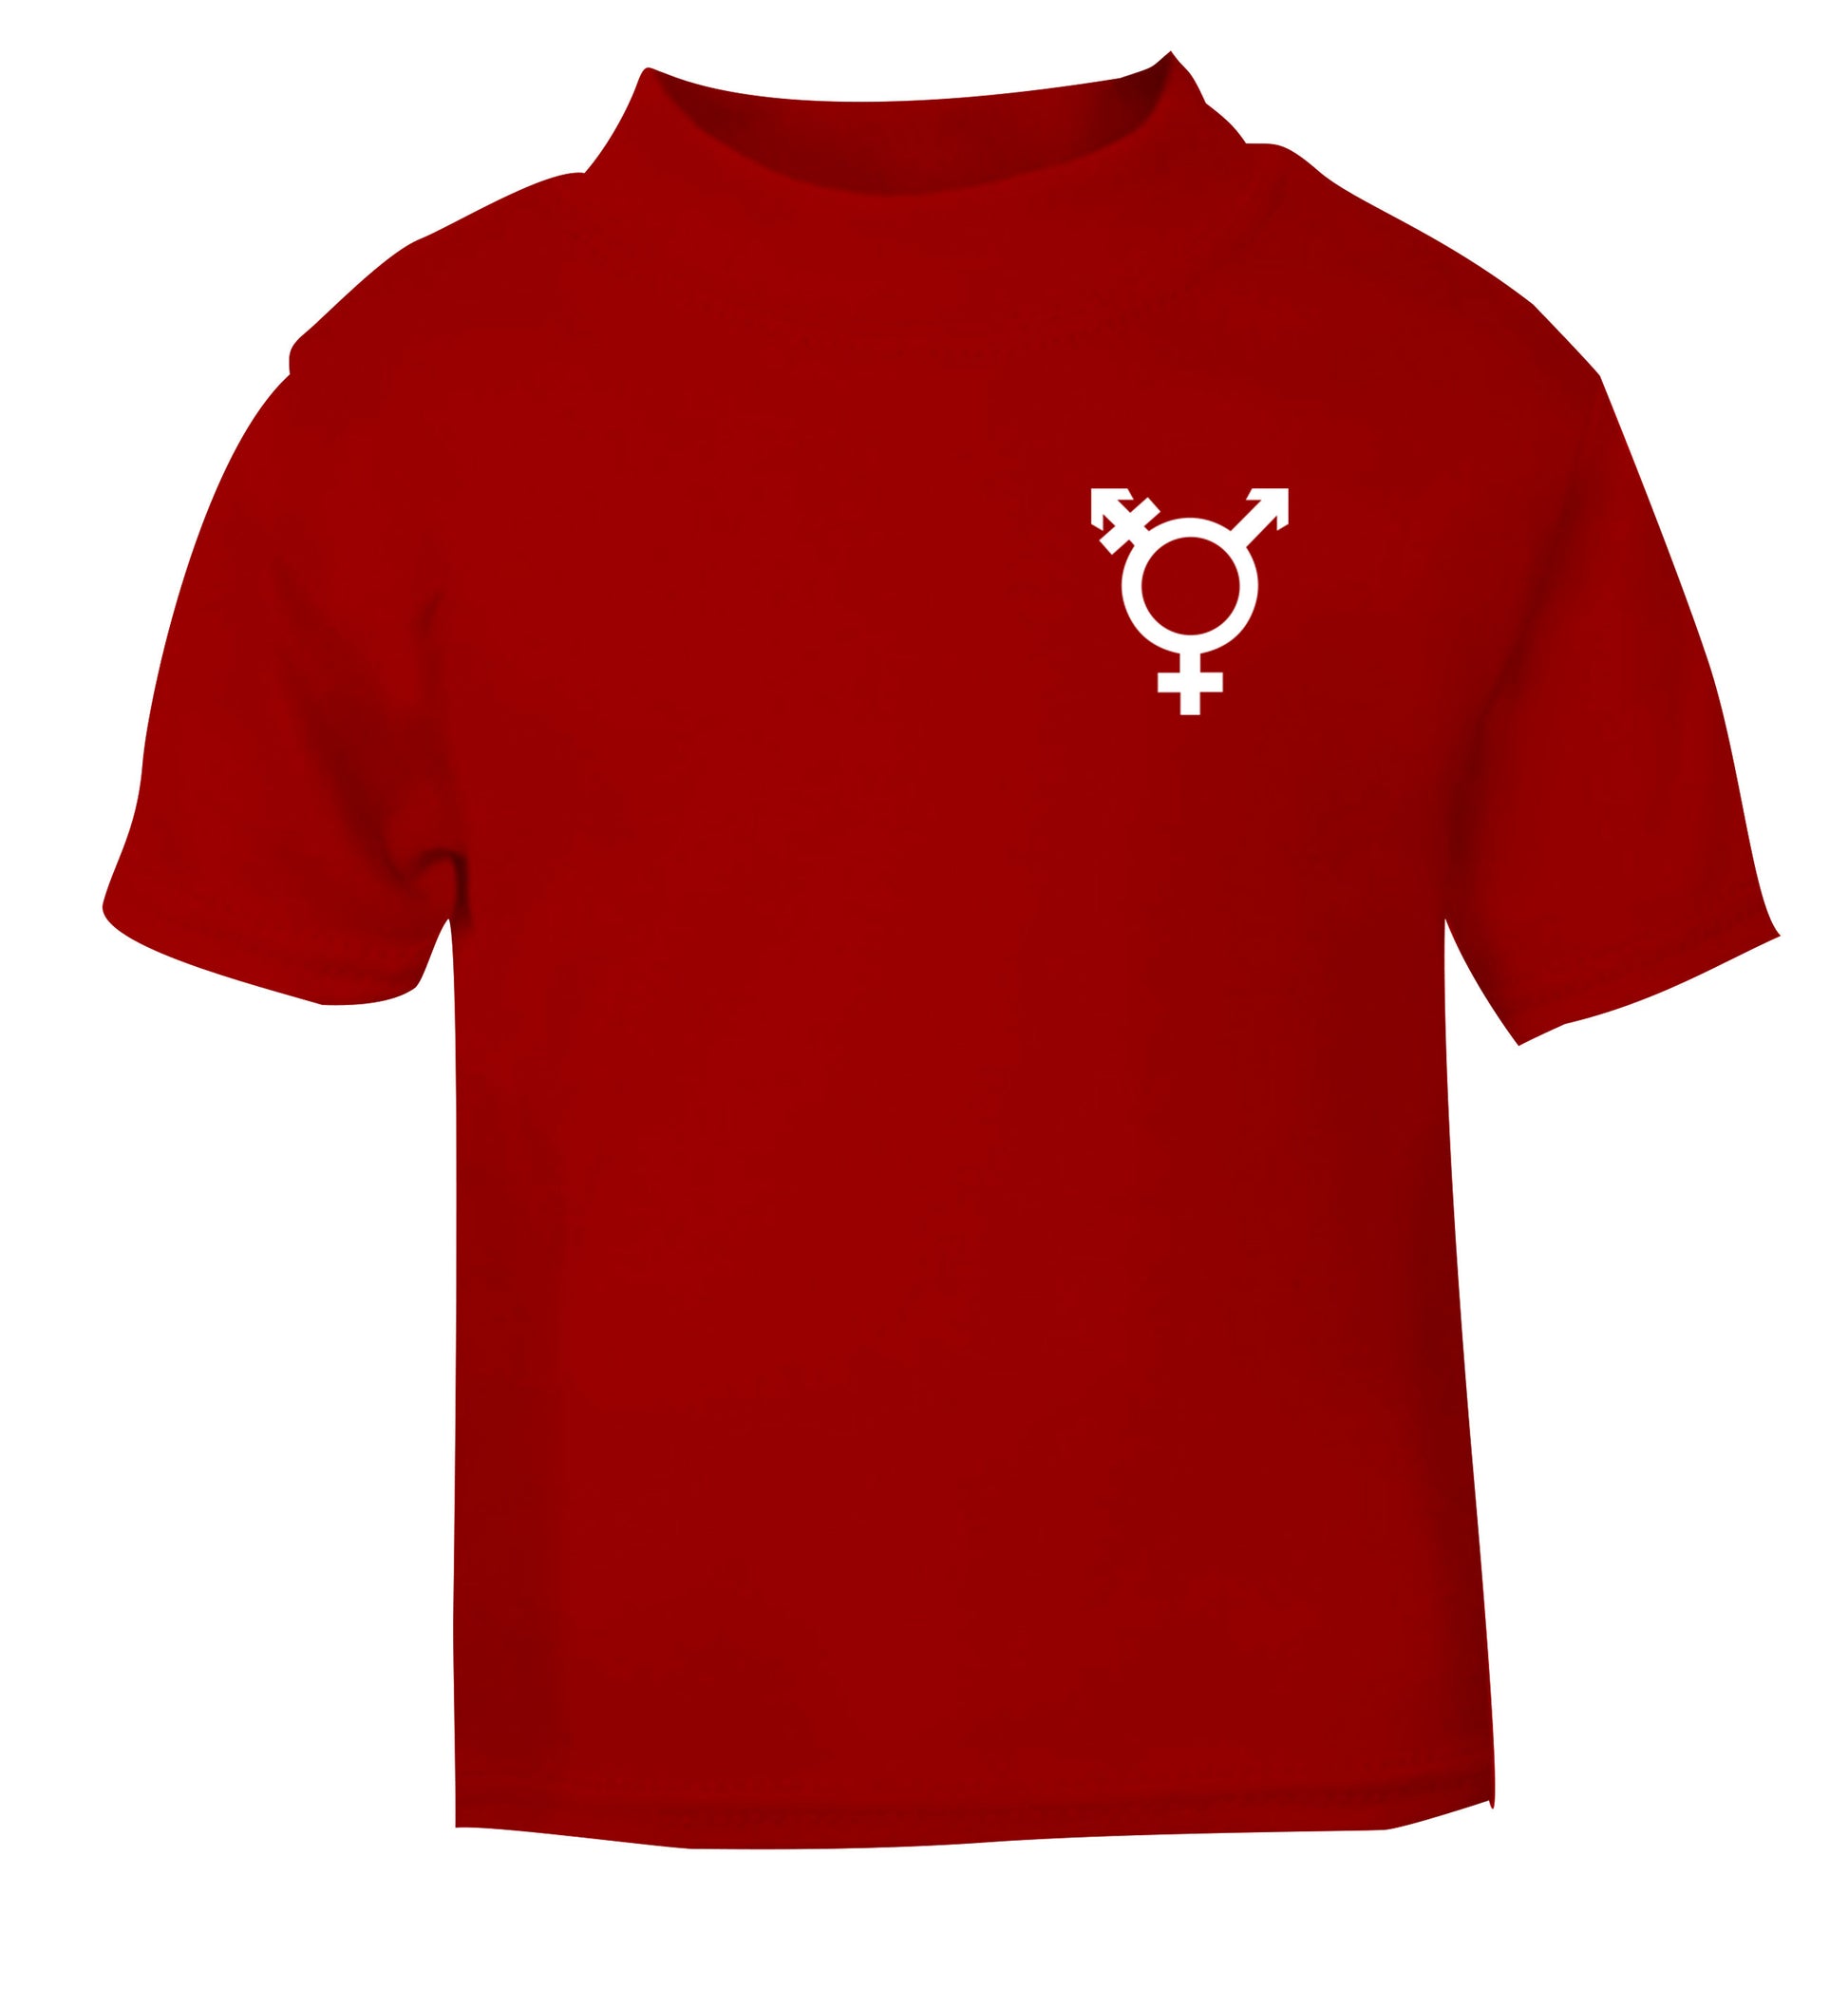 Trans gender symbol pocket red Baby Toddler Tshirt 2 Years